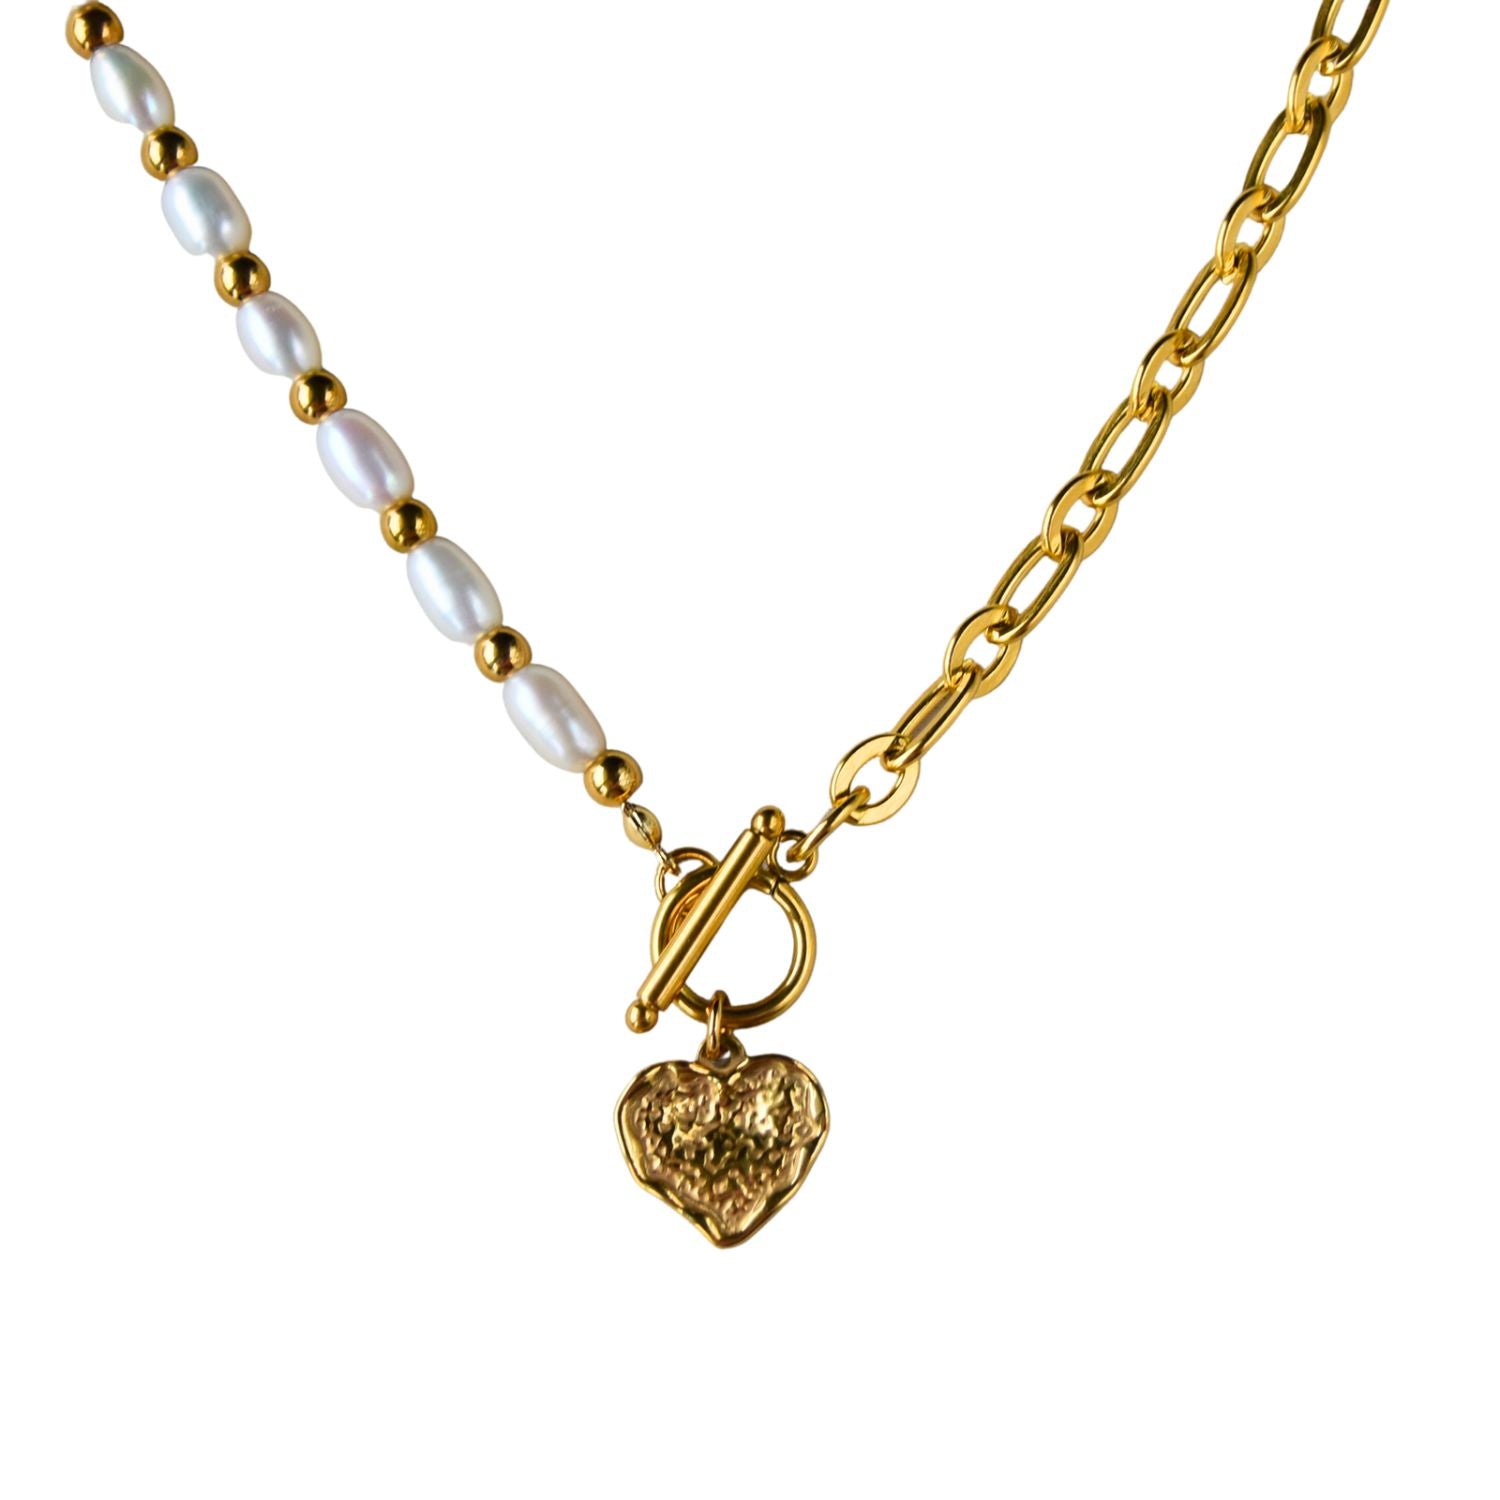 Half-half necklace with a heart